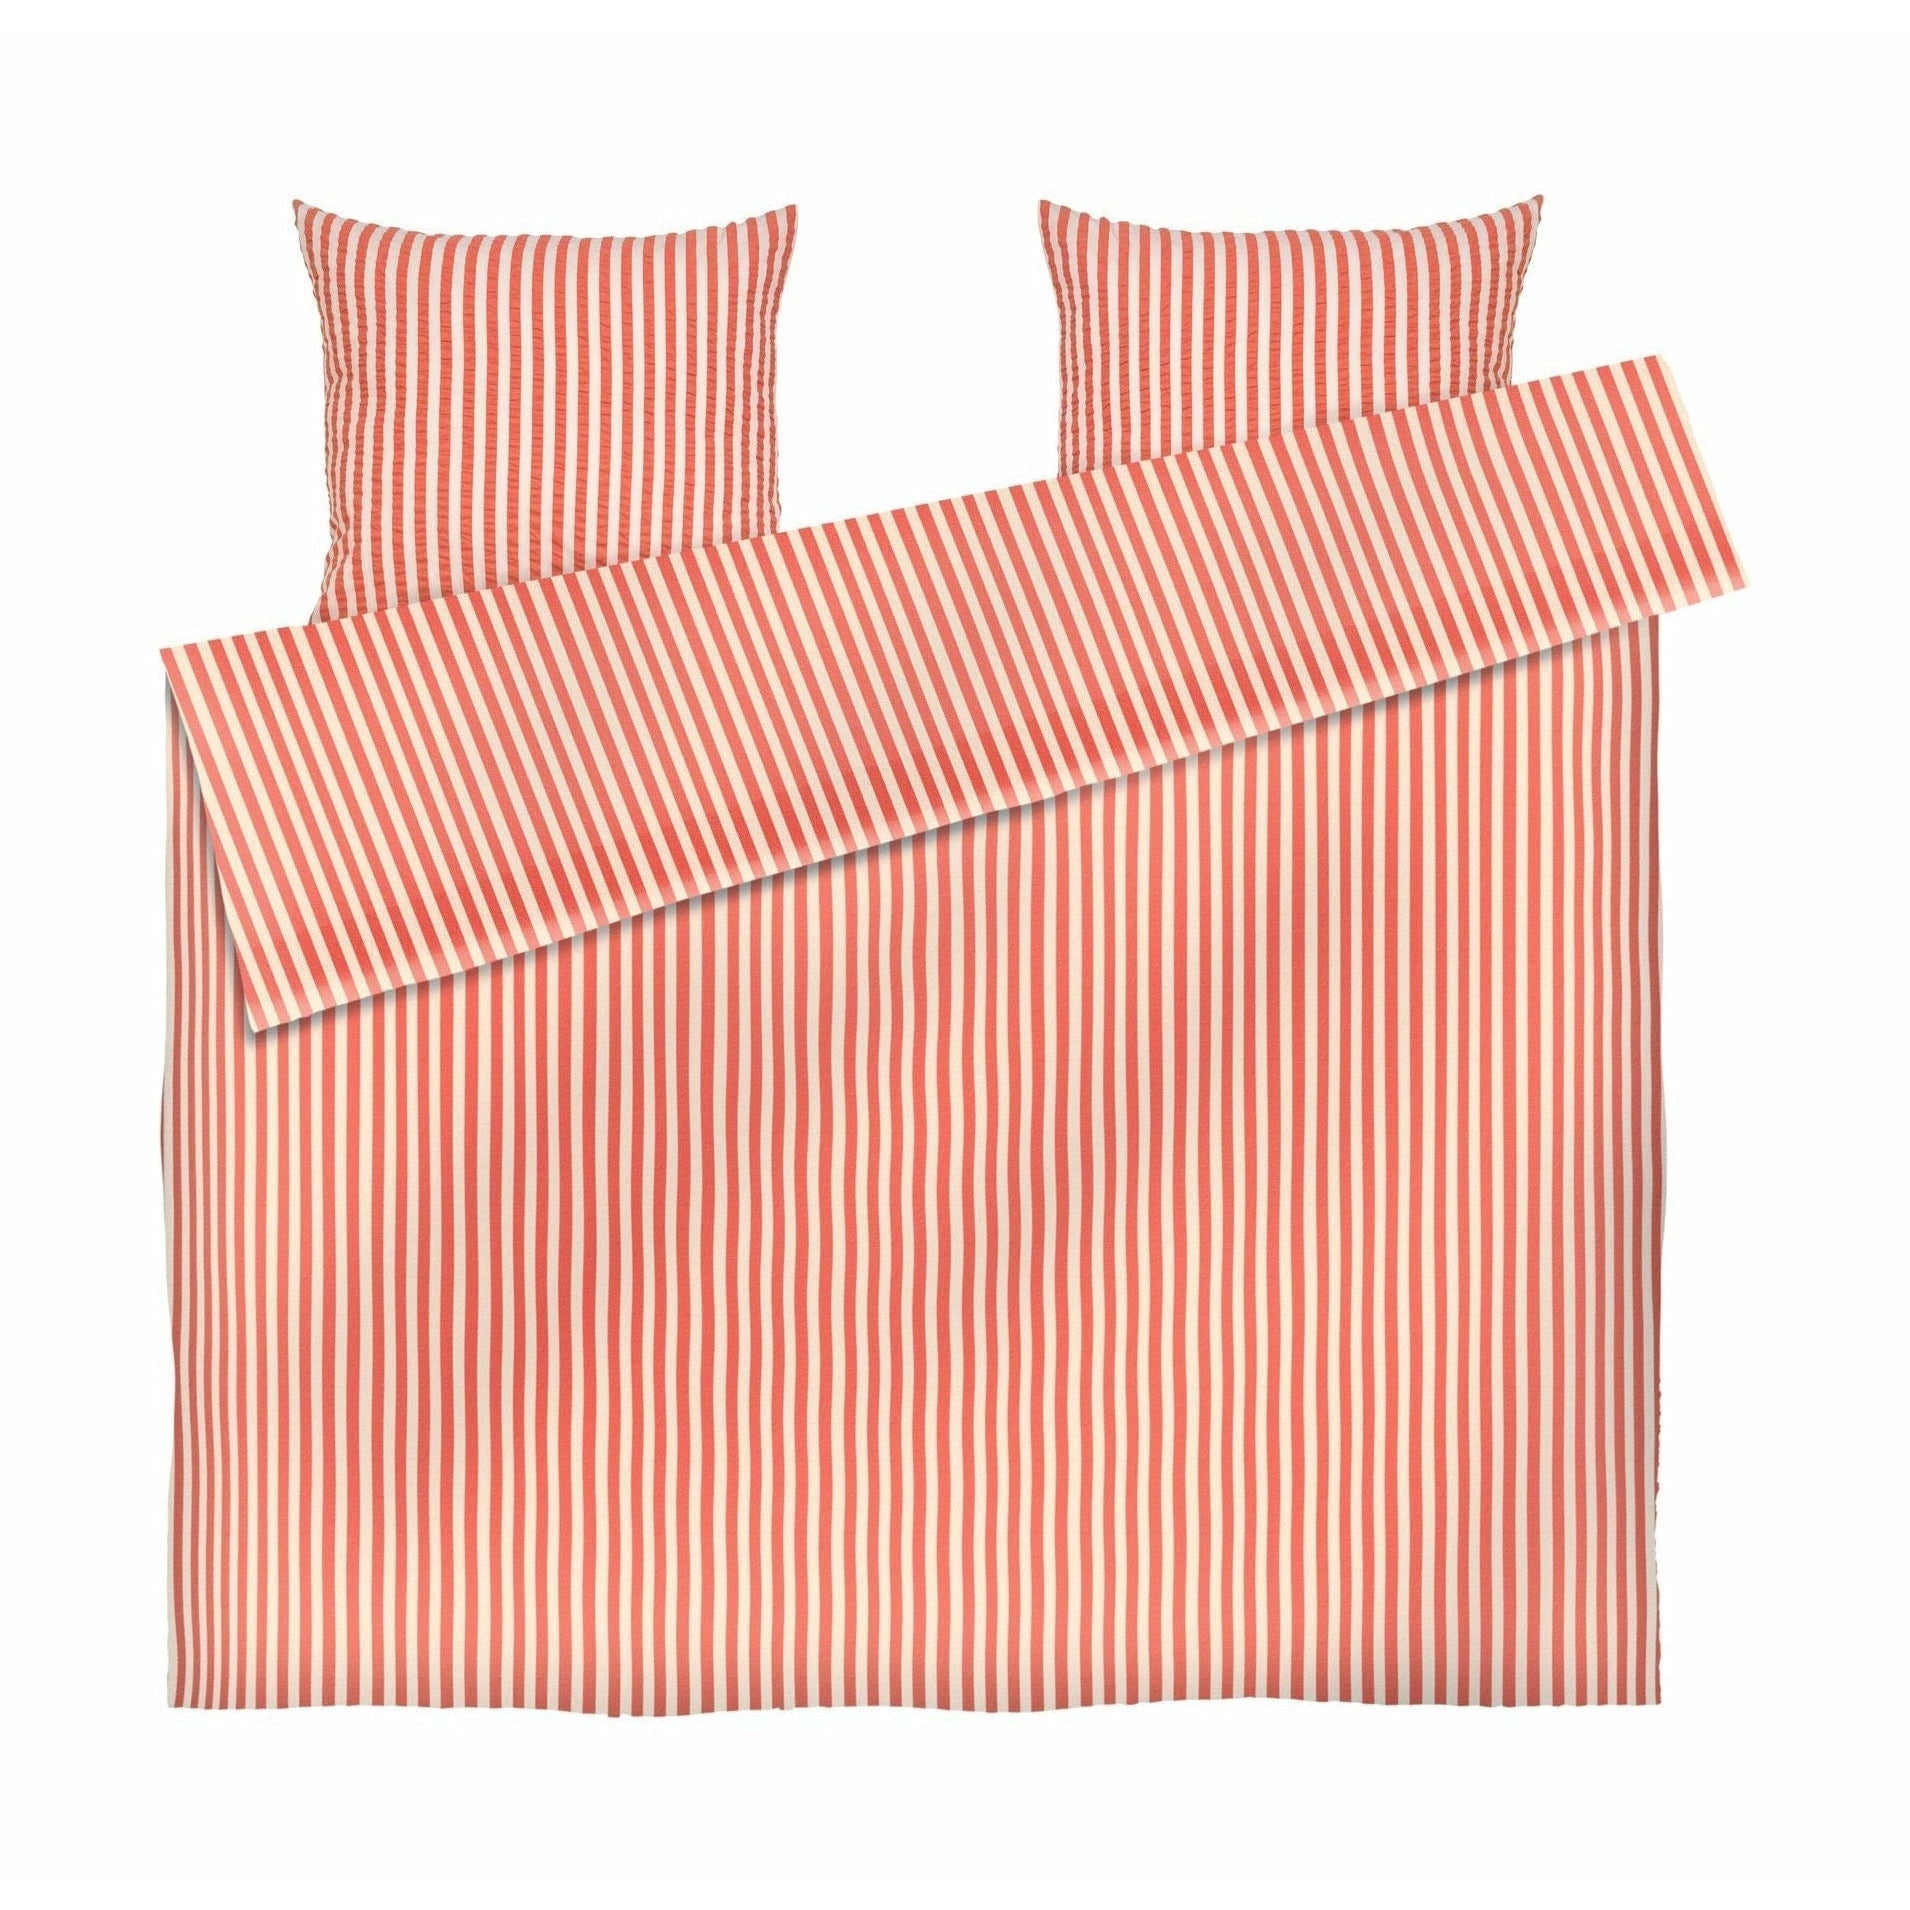 Juna Bæk & Wave Lines sängkläder 200x220 cm, chili/björk